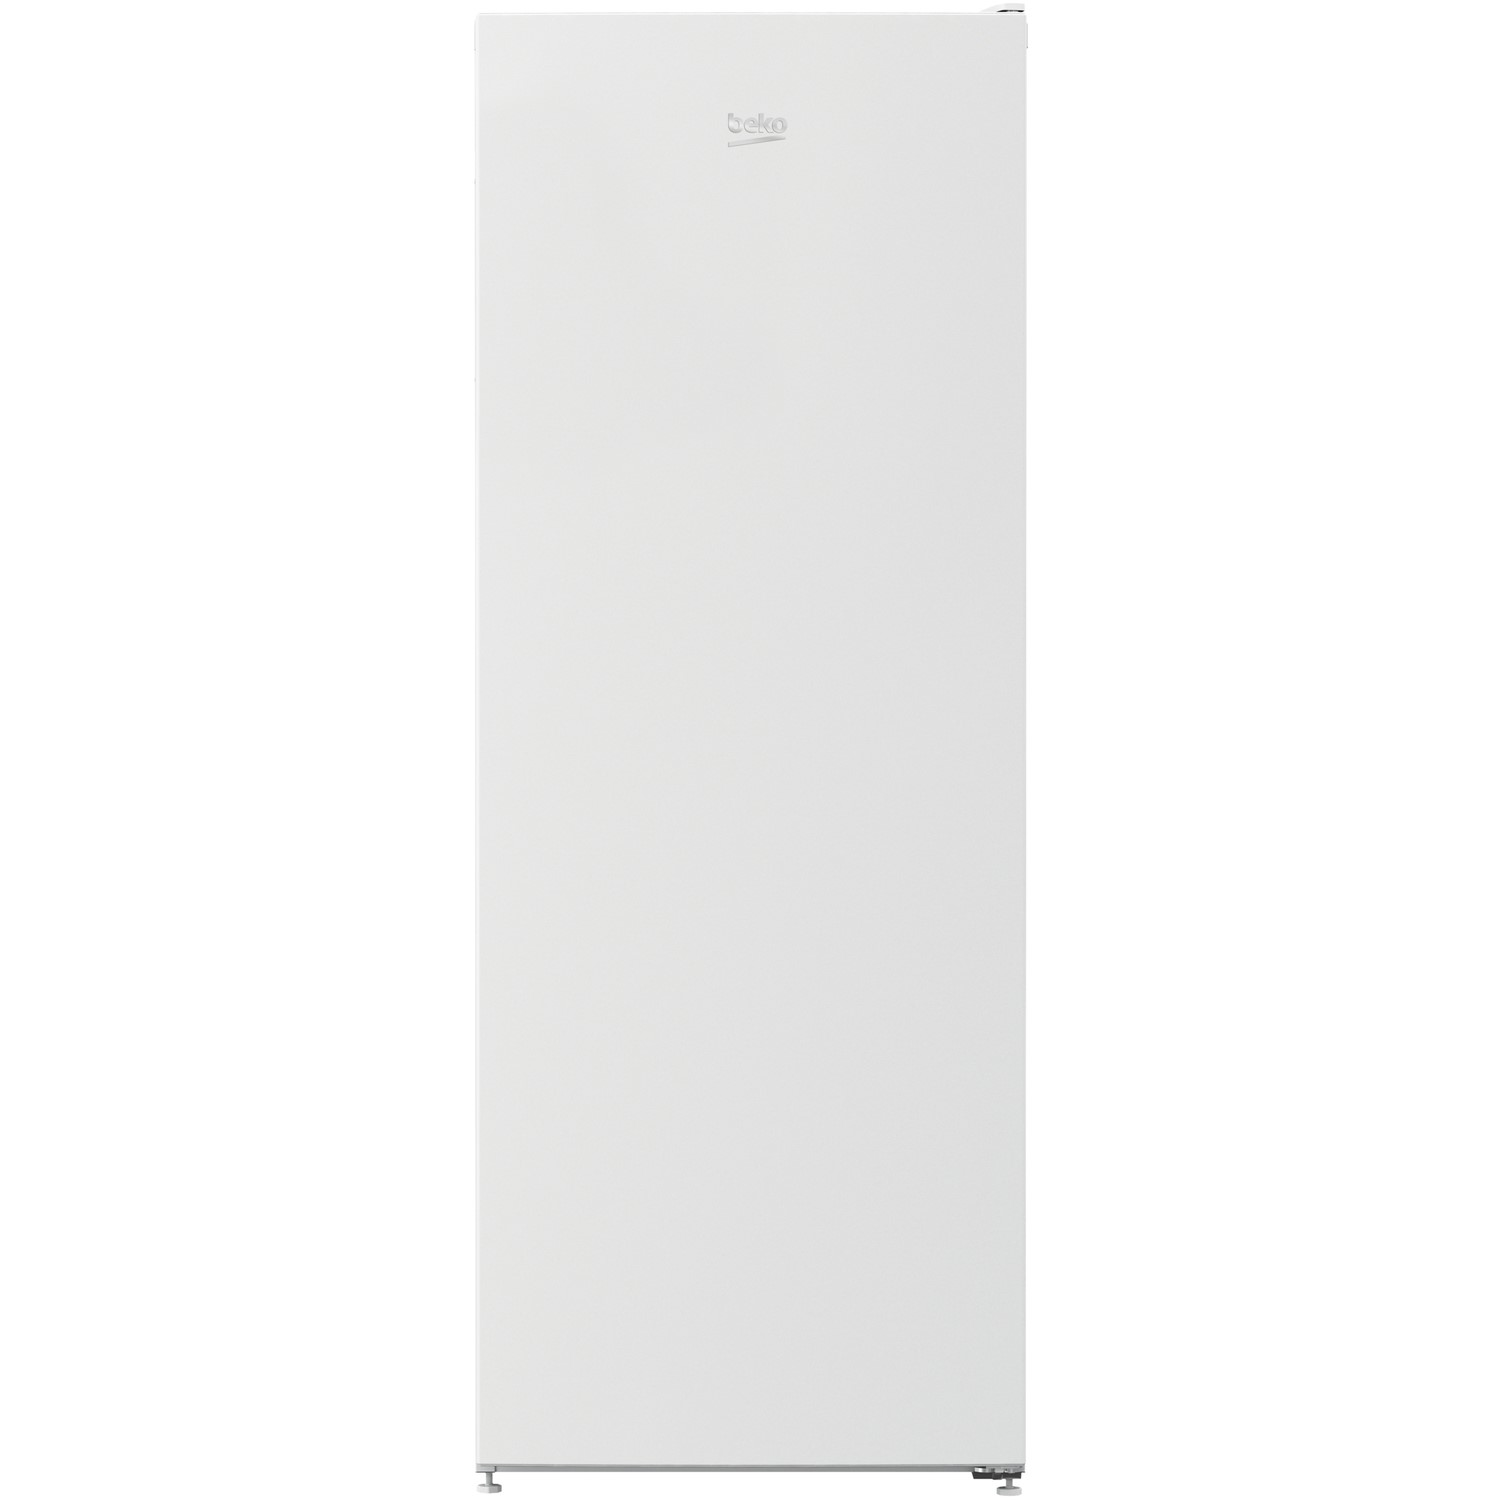 Beko FSG1545W Upright Freezer - White - F Rated